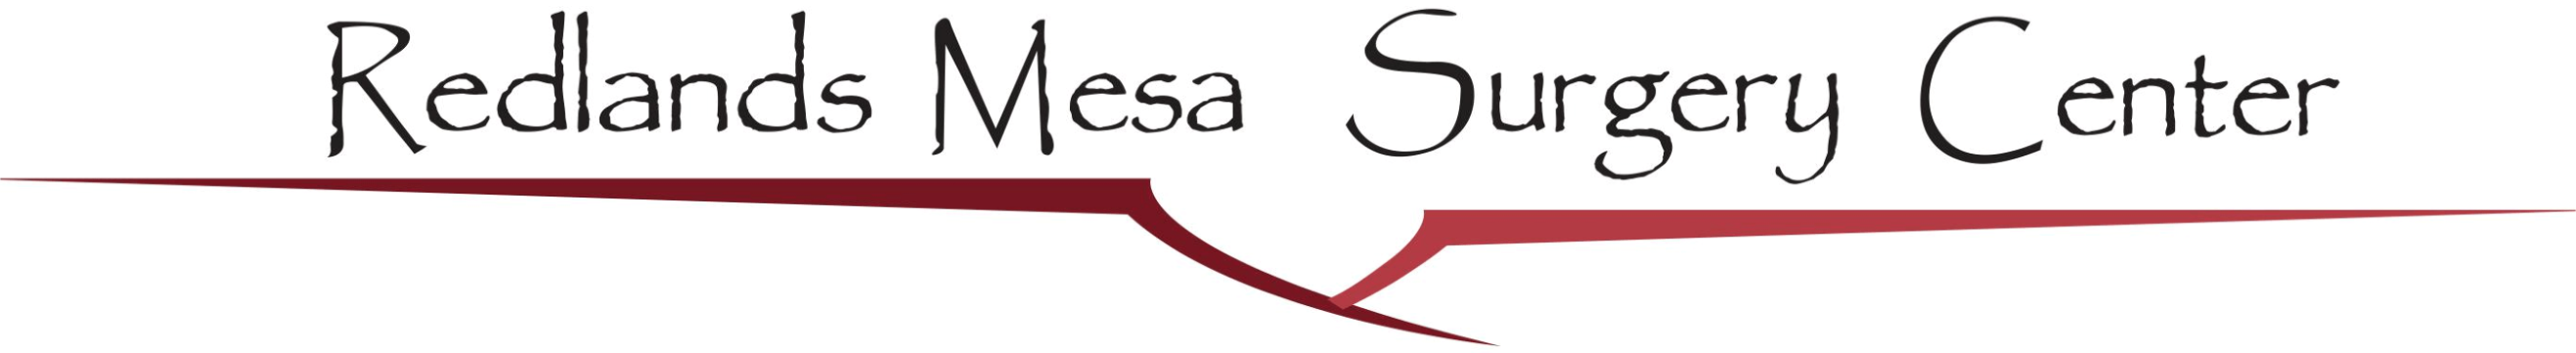 Redlands Mesa Surgery Center logo